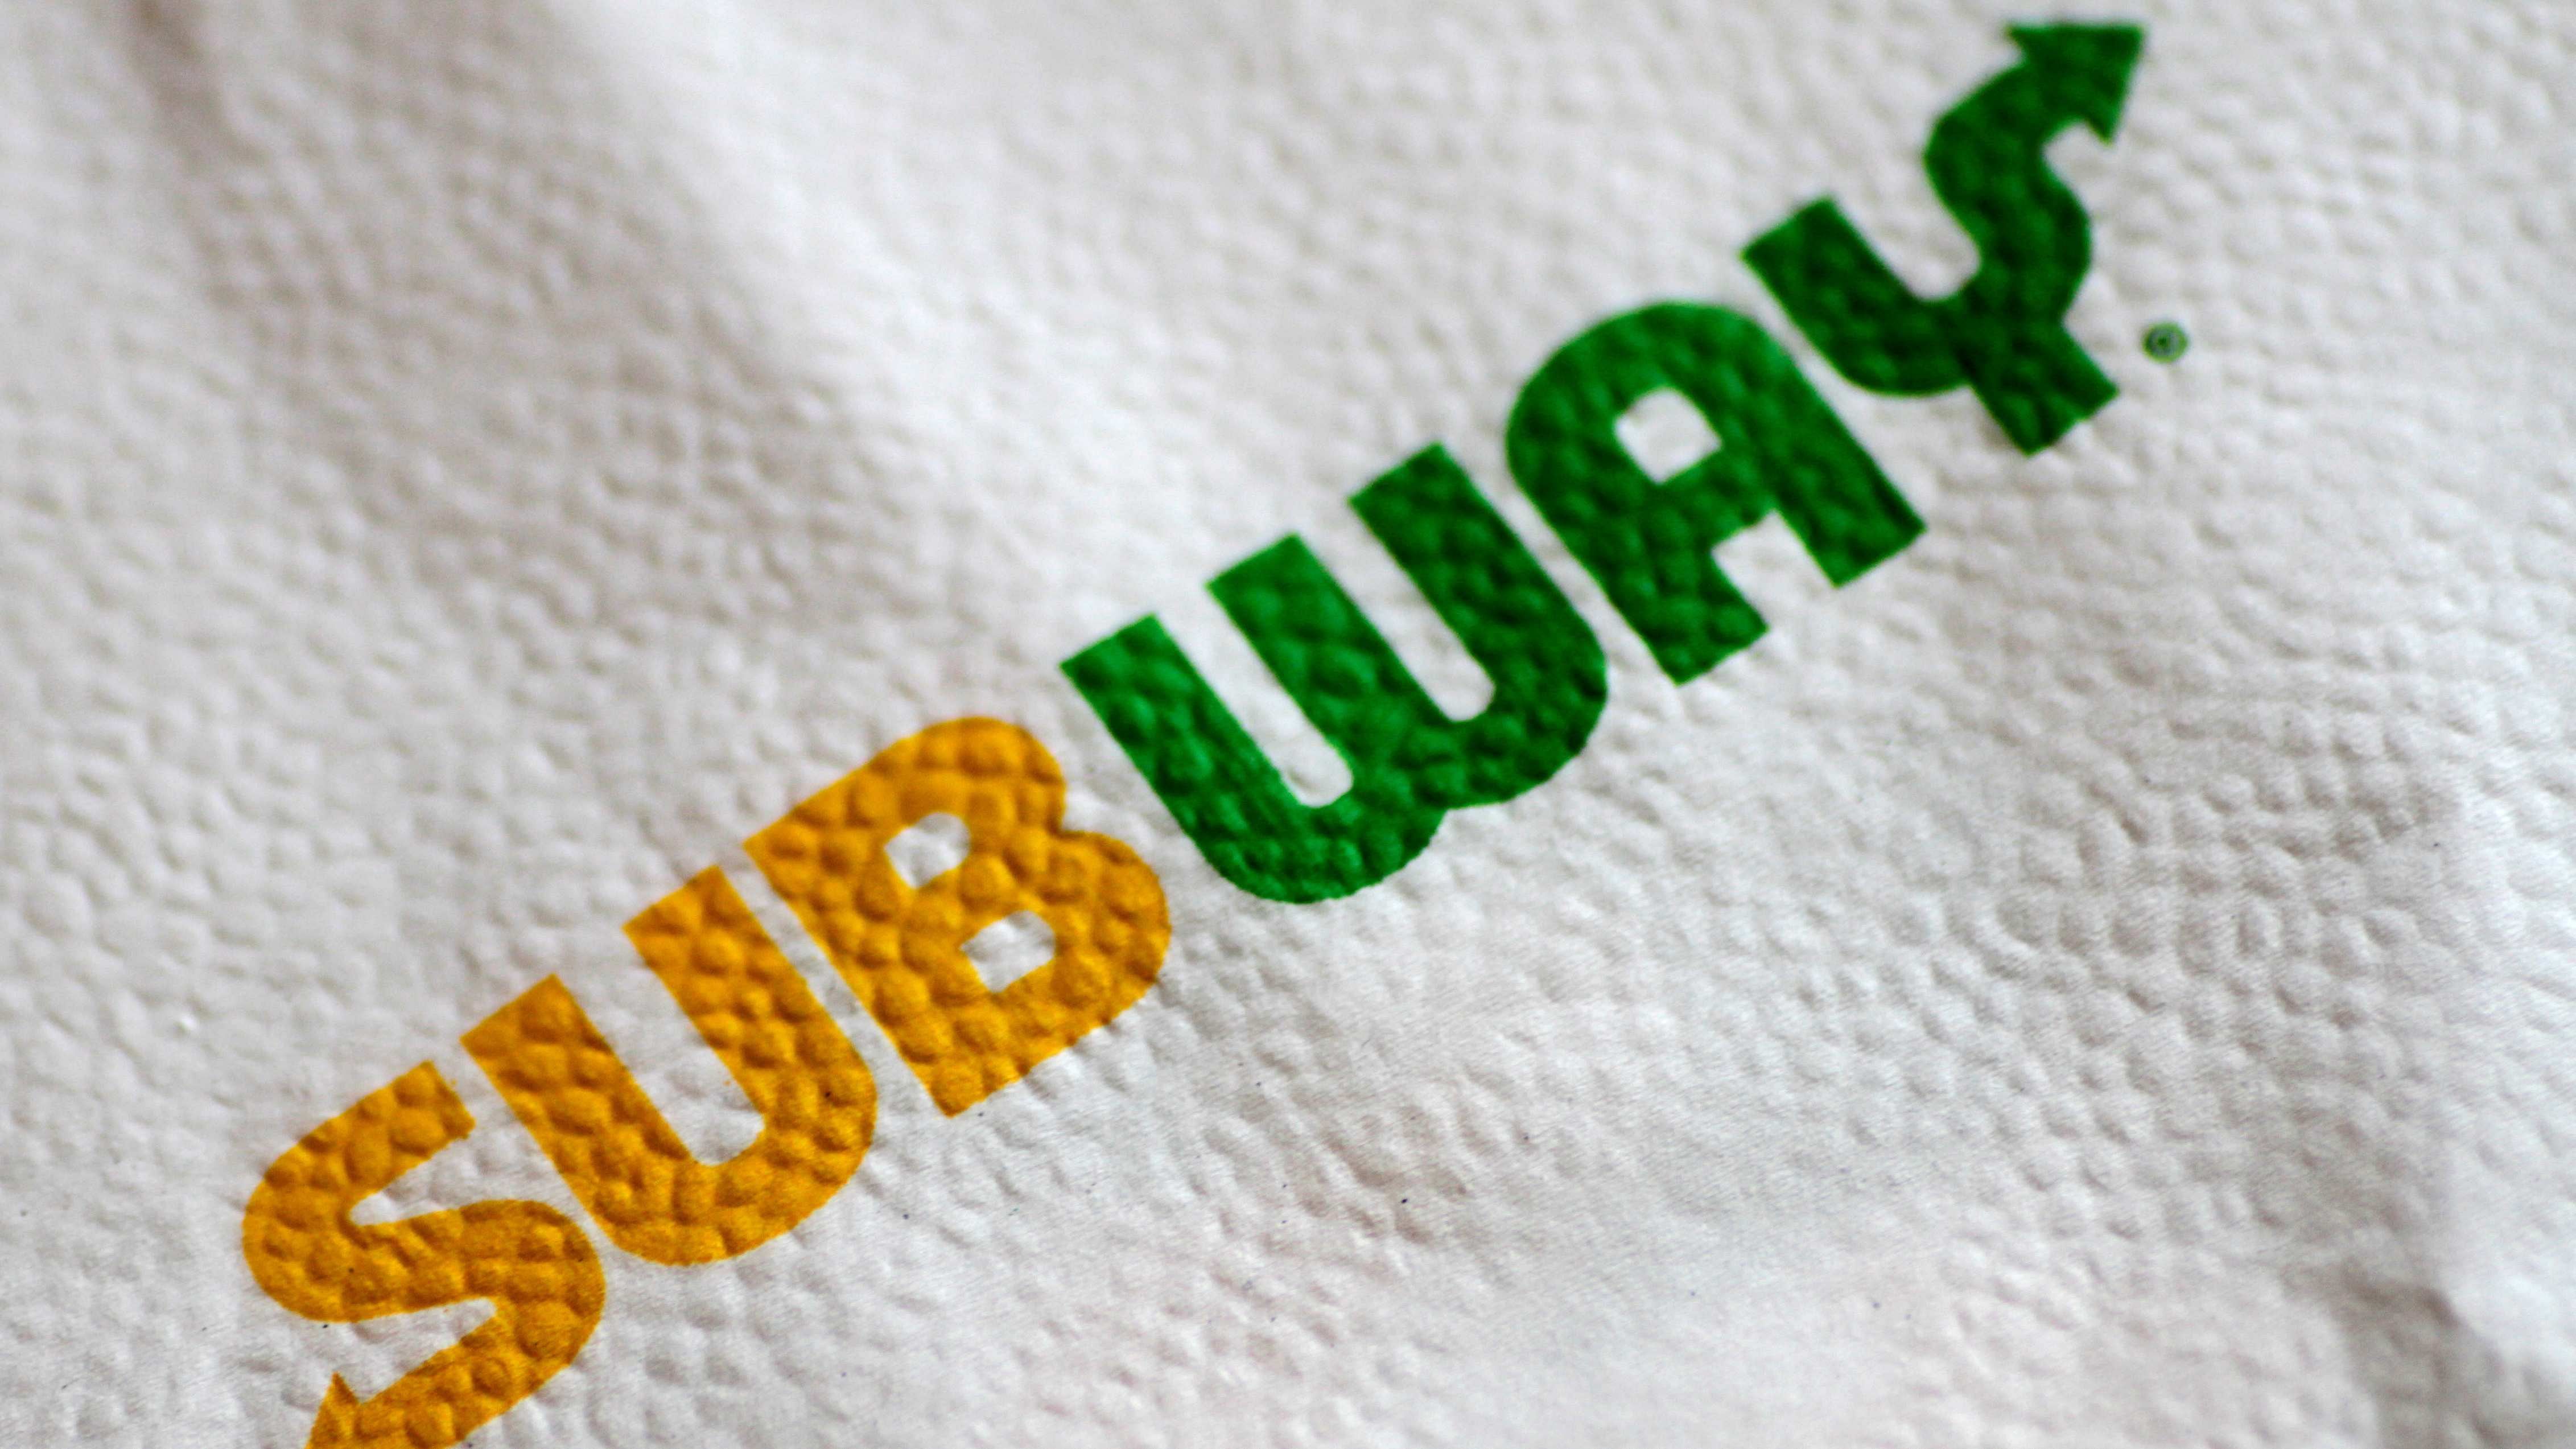 The Subway restaurant logo. Credit: Reuters Photo